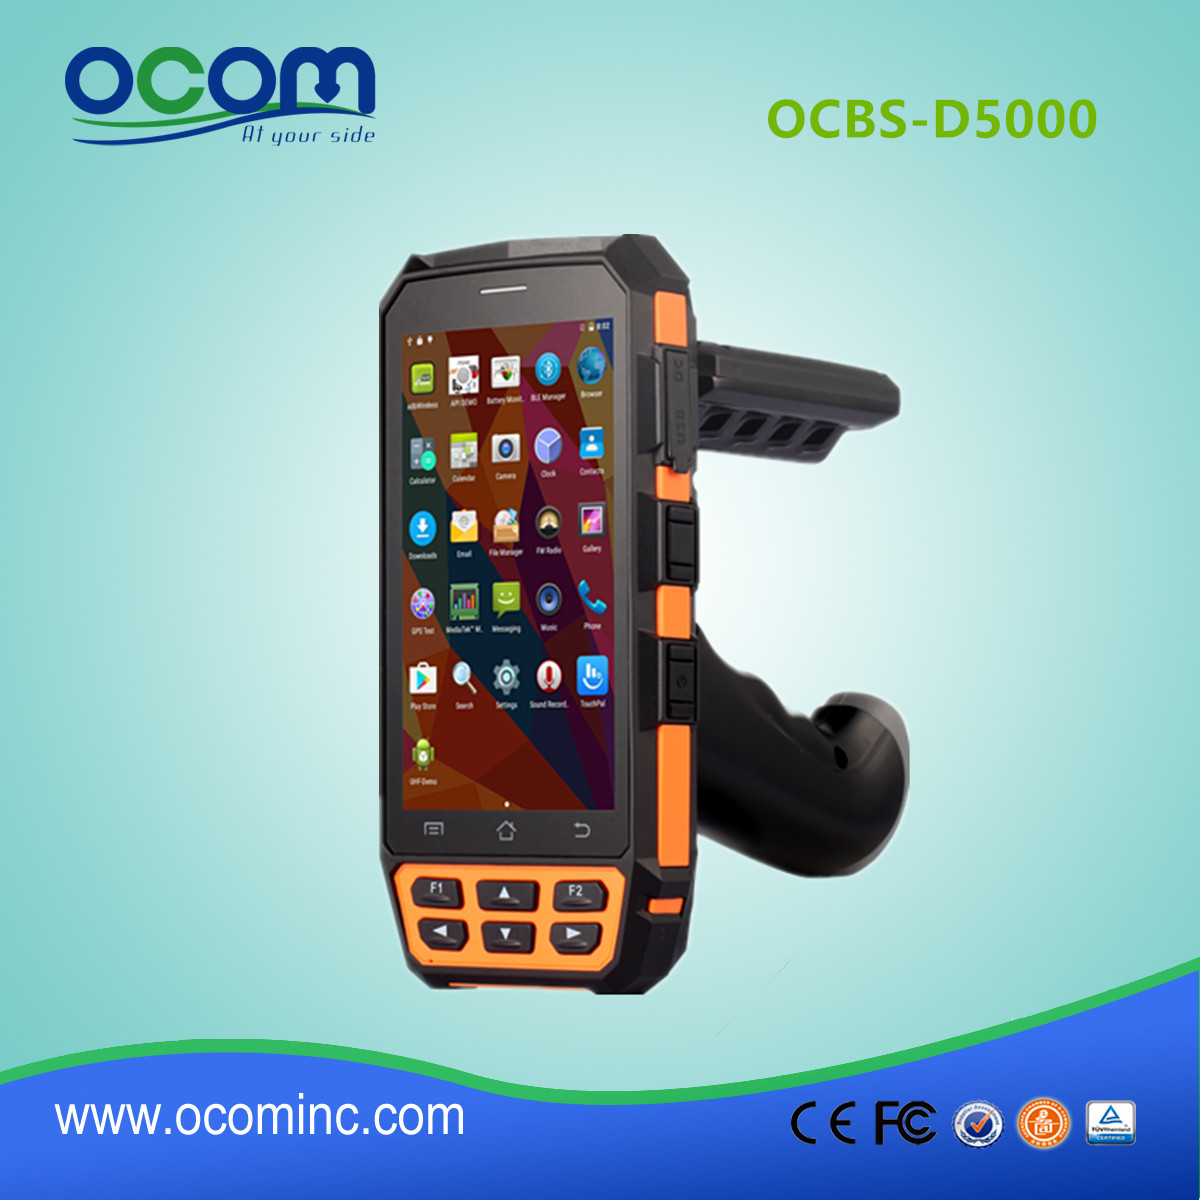 OCBS-D5000 draagbare handheld computer android dataverzameling terminal handheld data-overdracht apparaat